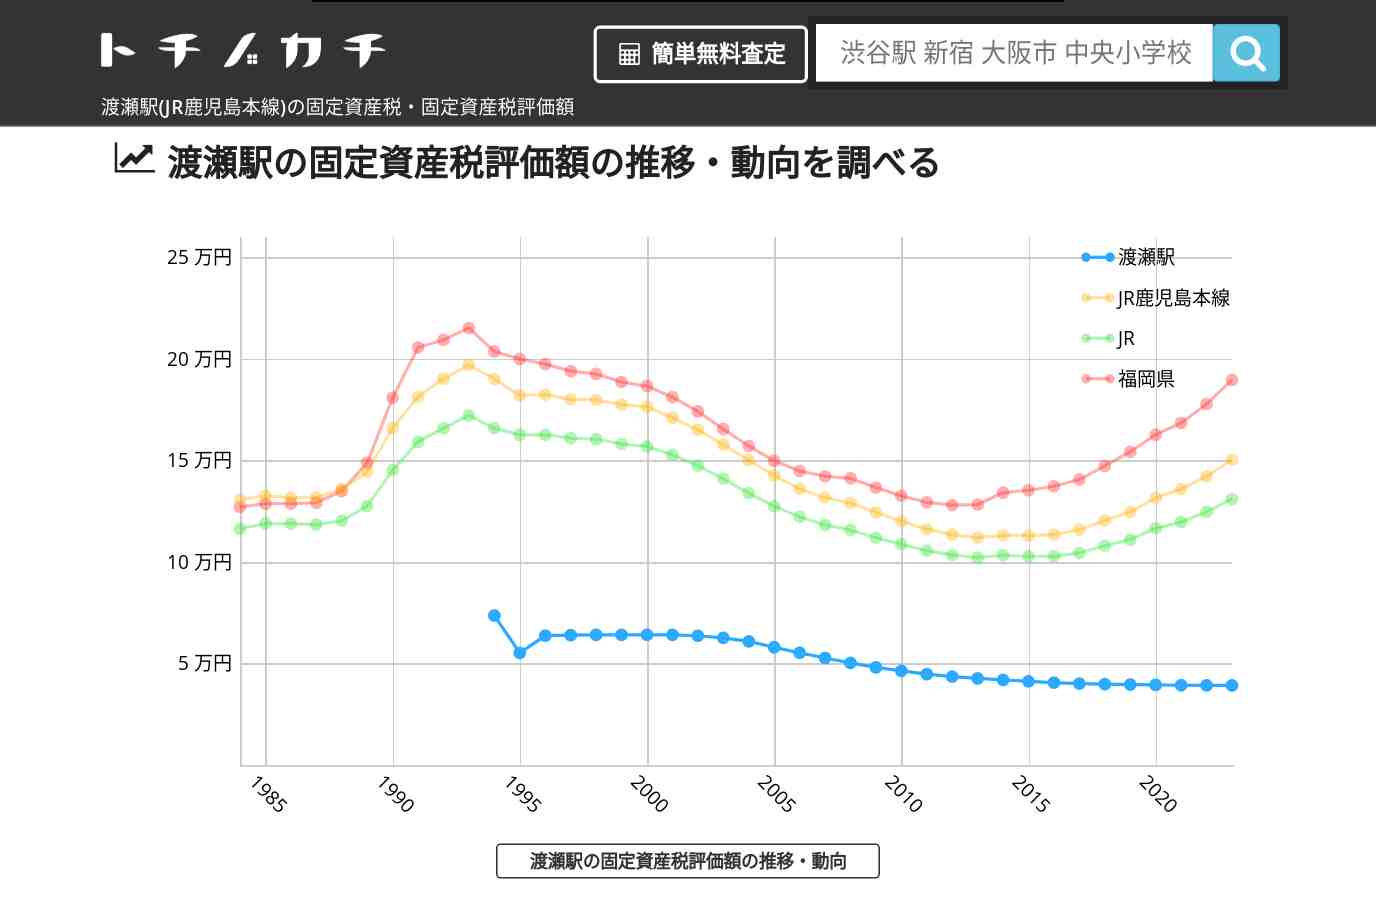 渡瀬駅(JR鹿児島本線)の固定資産税・固定資産税評価額 | トチノカチ